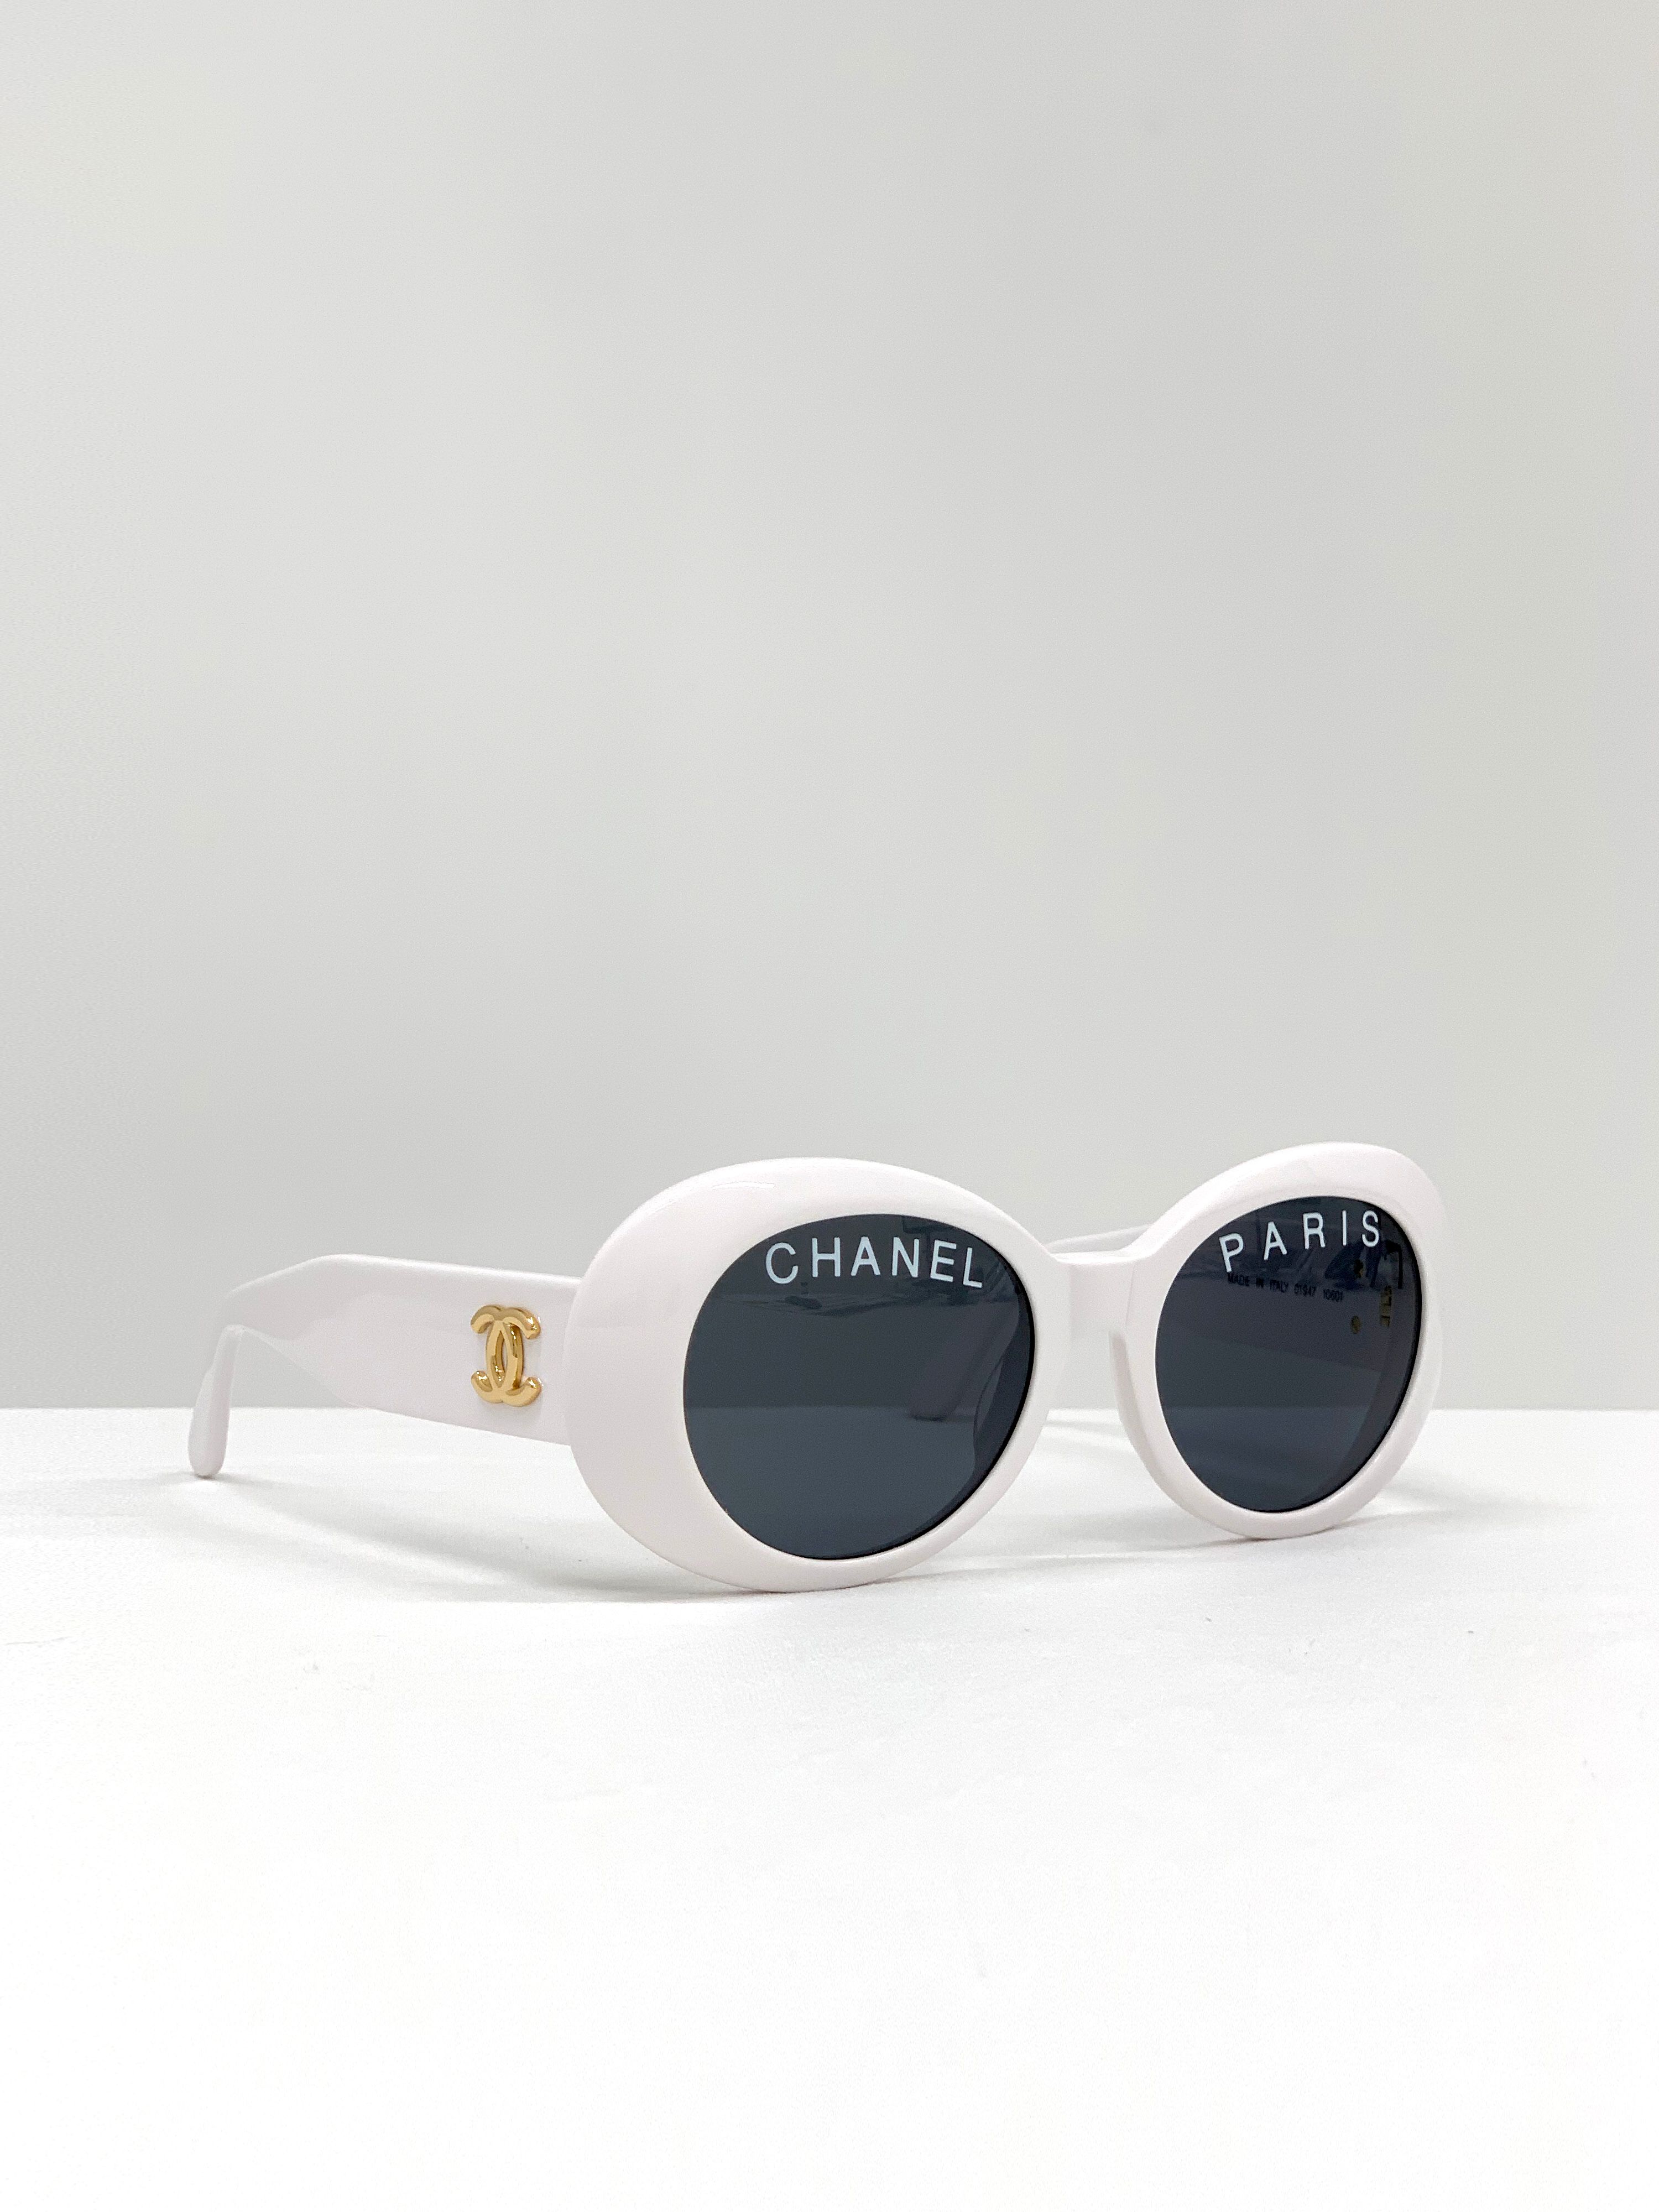 Vintage Chanel 1993 Iconic CHANEL PARIS Spelled White Sunglasses